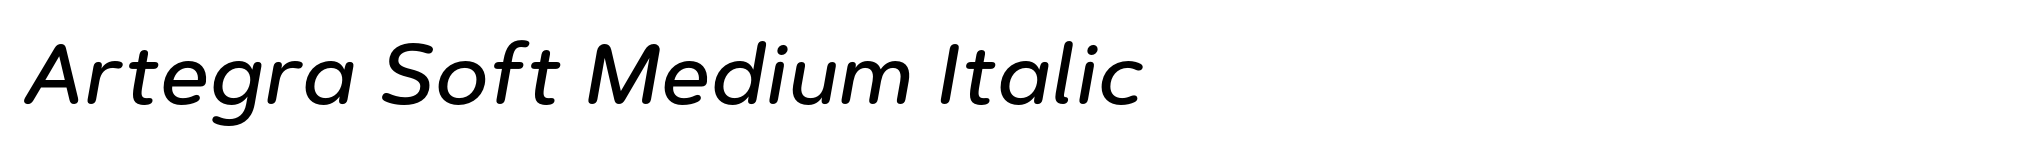 Artegra Soft Medium Italic image